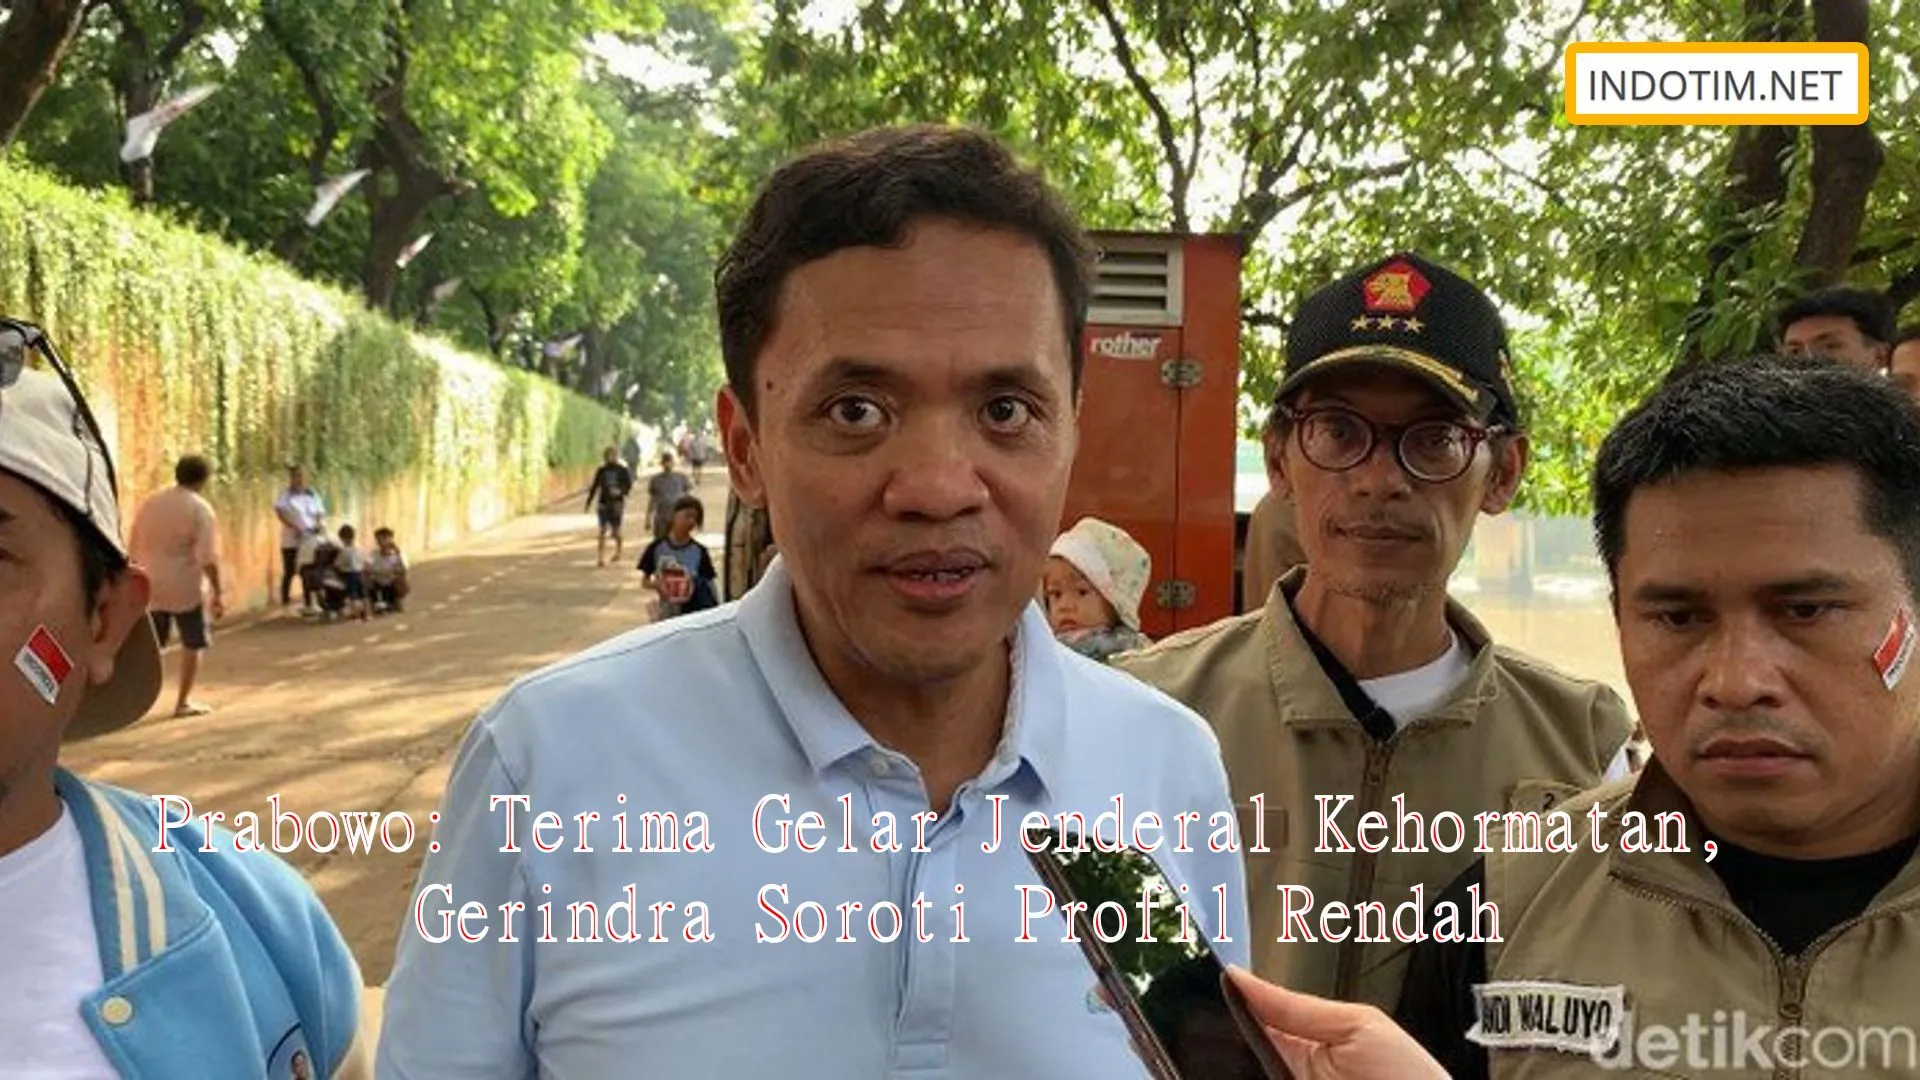 Prabowo: Terima Gelar Jenderal Kehormatan, Gerindra Soroti Profil Rendah